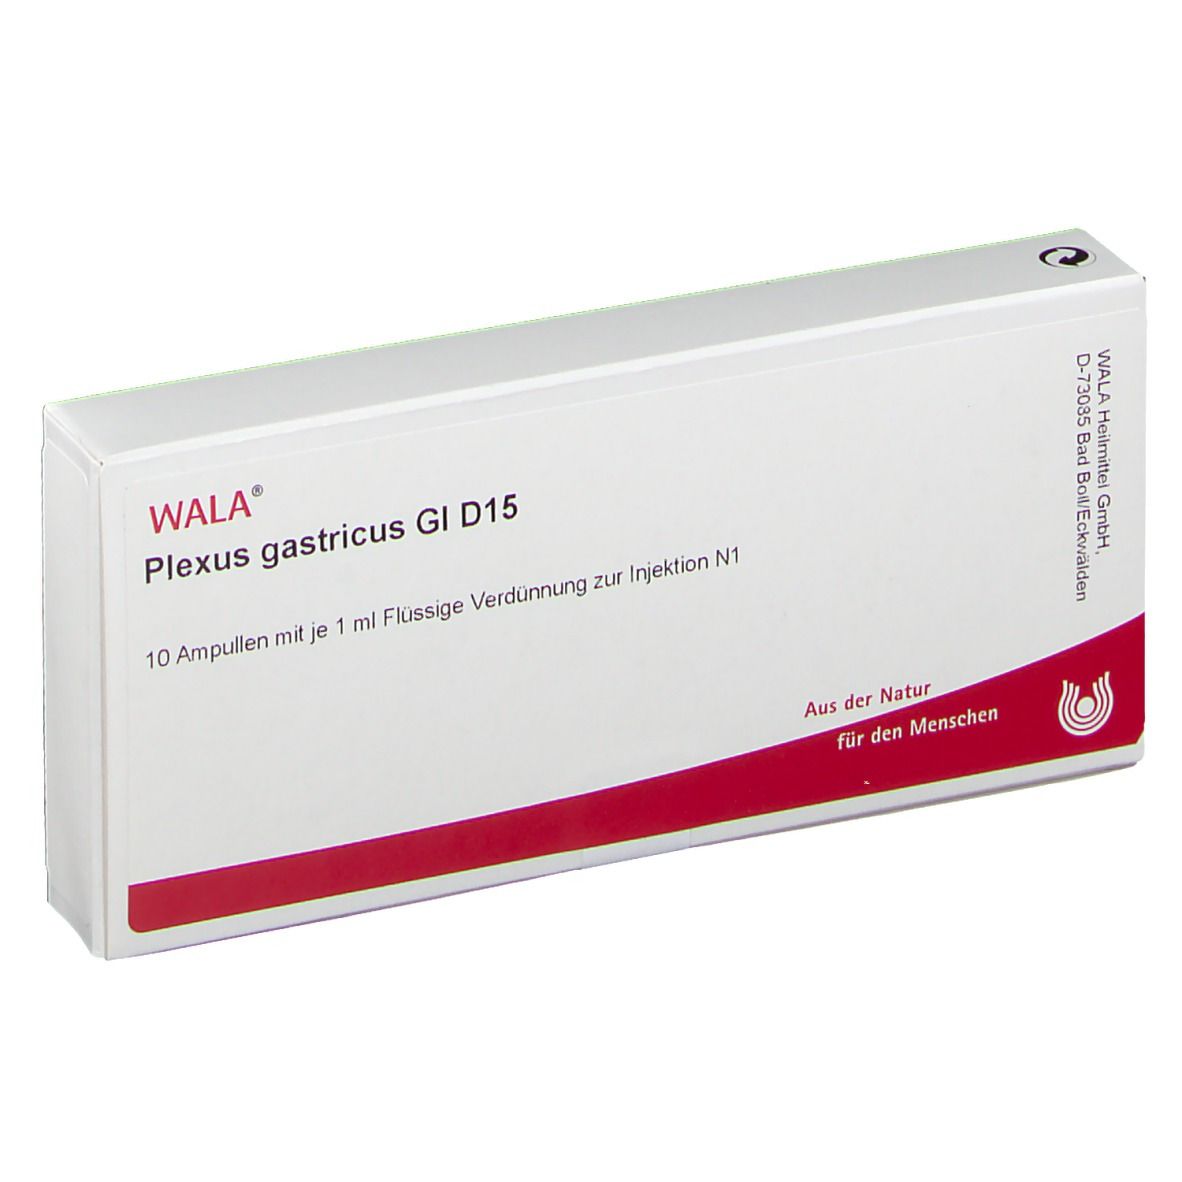 WALA® Plexus gastricus Gl D 15